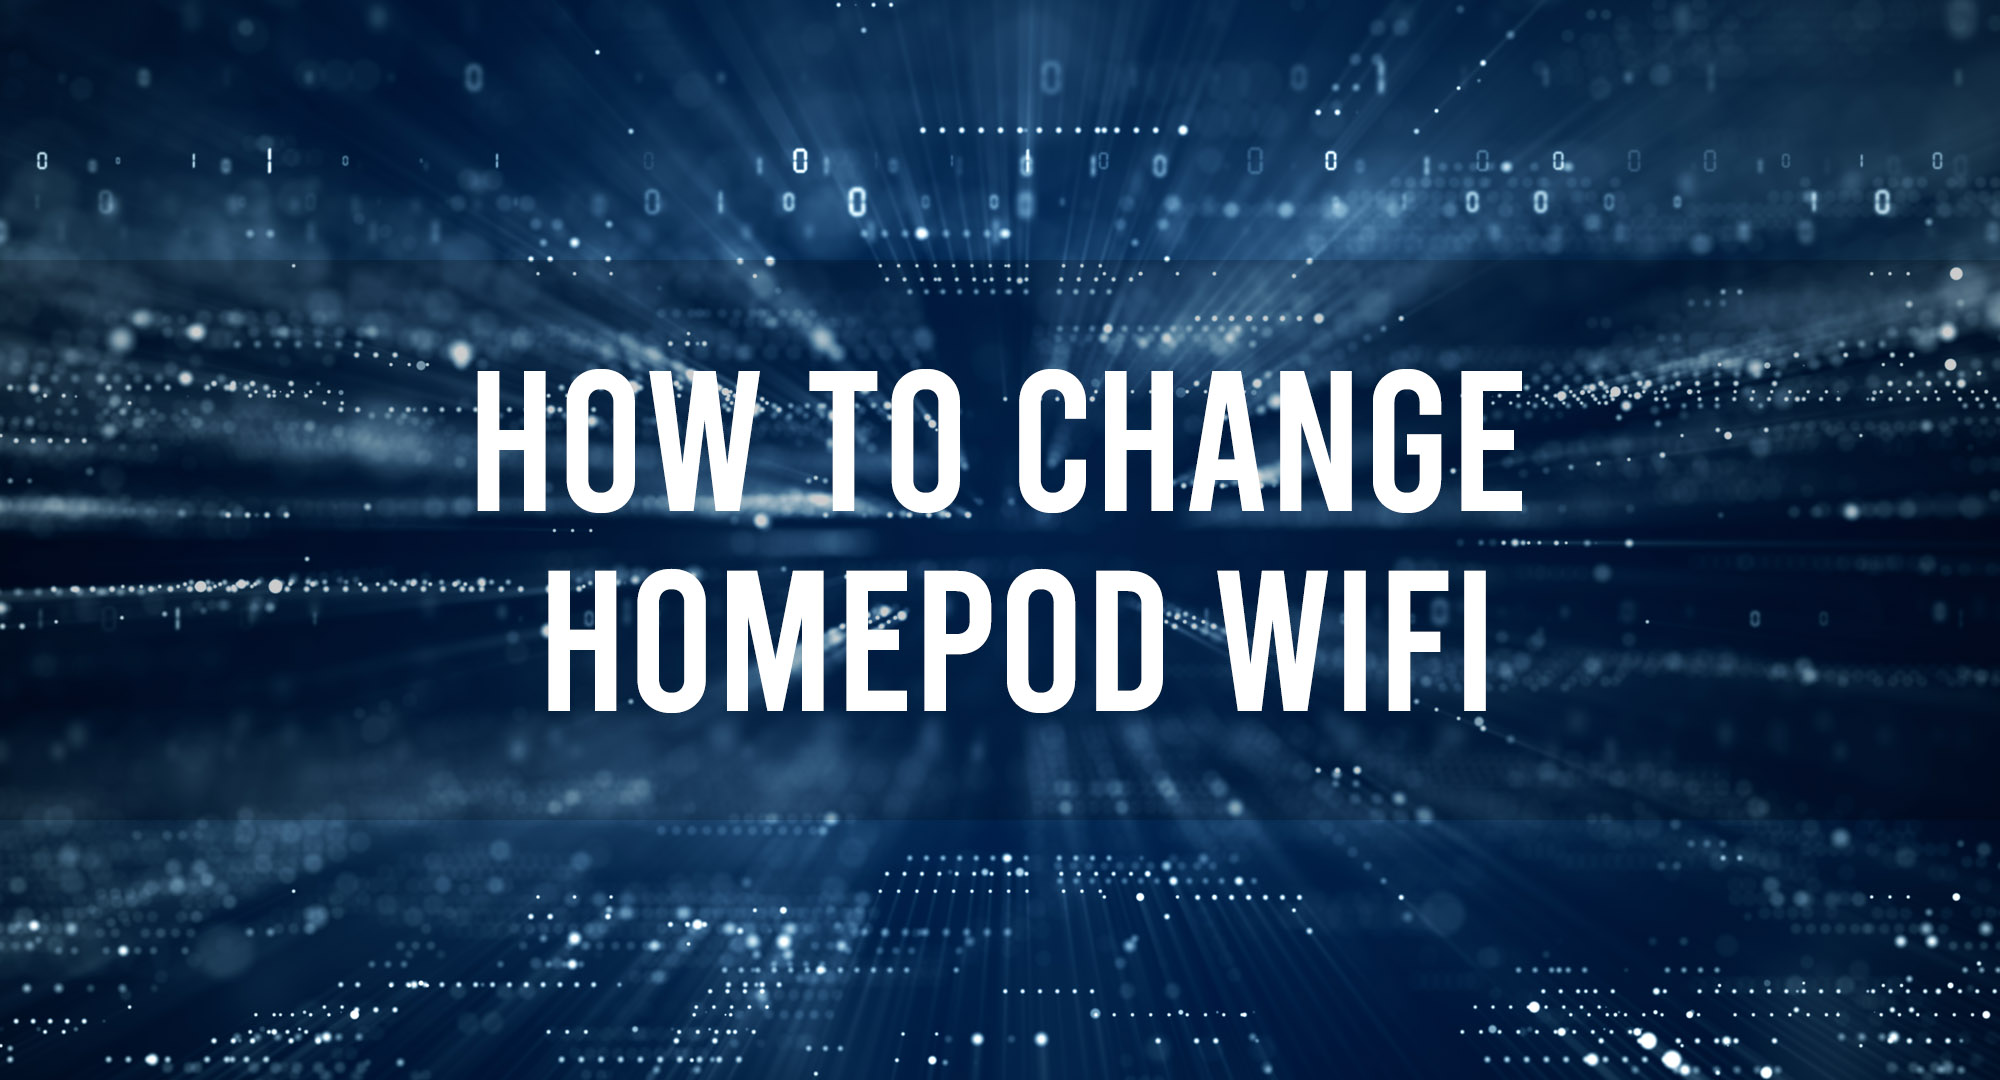 How to Change Homepod WIFI